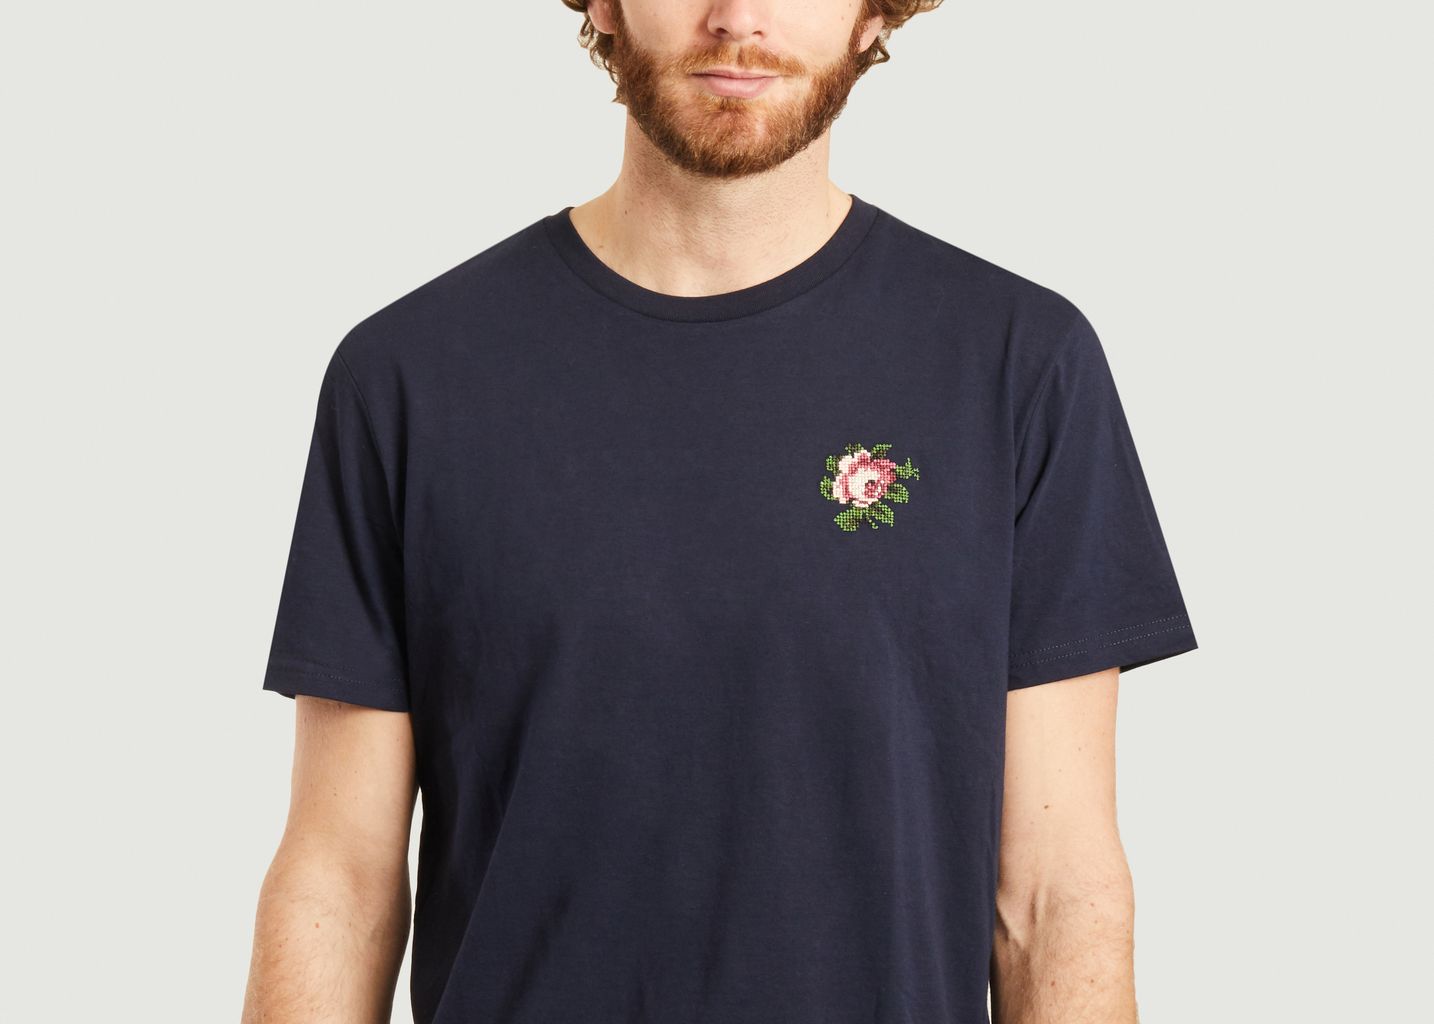 Rosa T-shirt - Johnny Romance